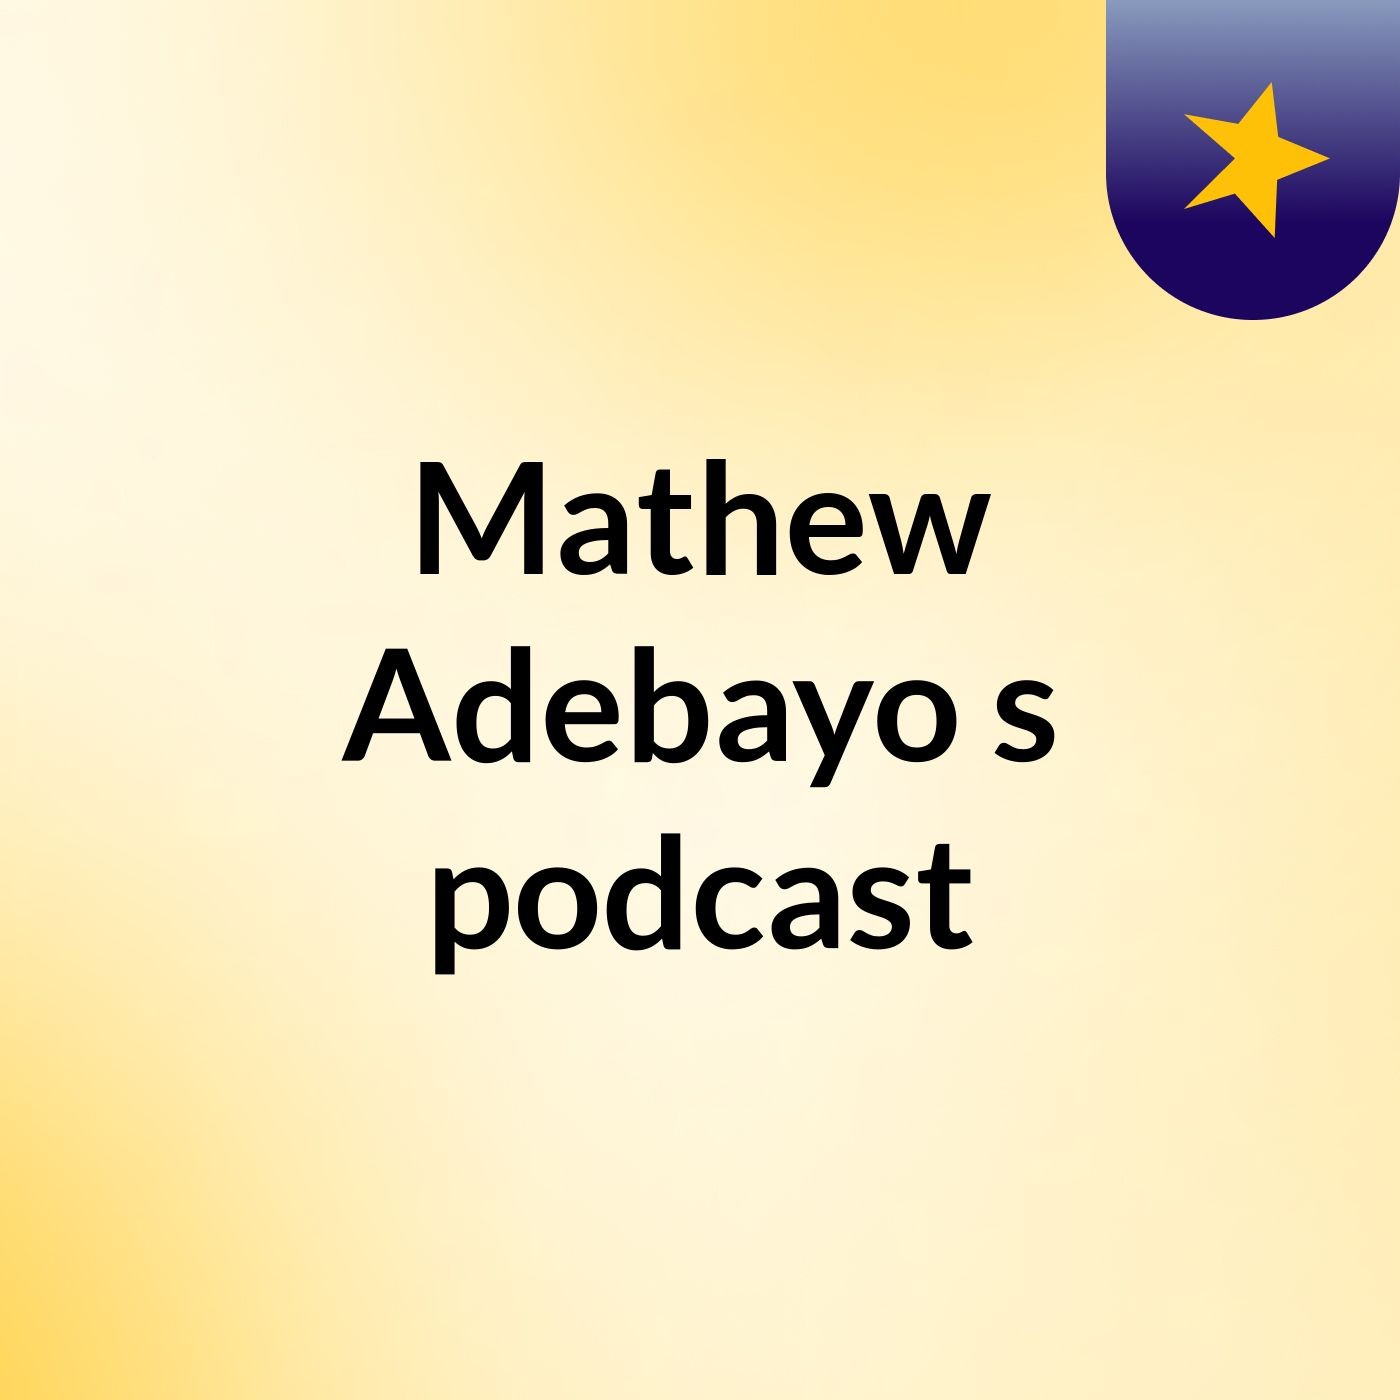 Mathew Adebayo's podcast